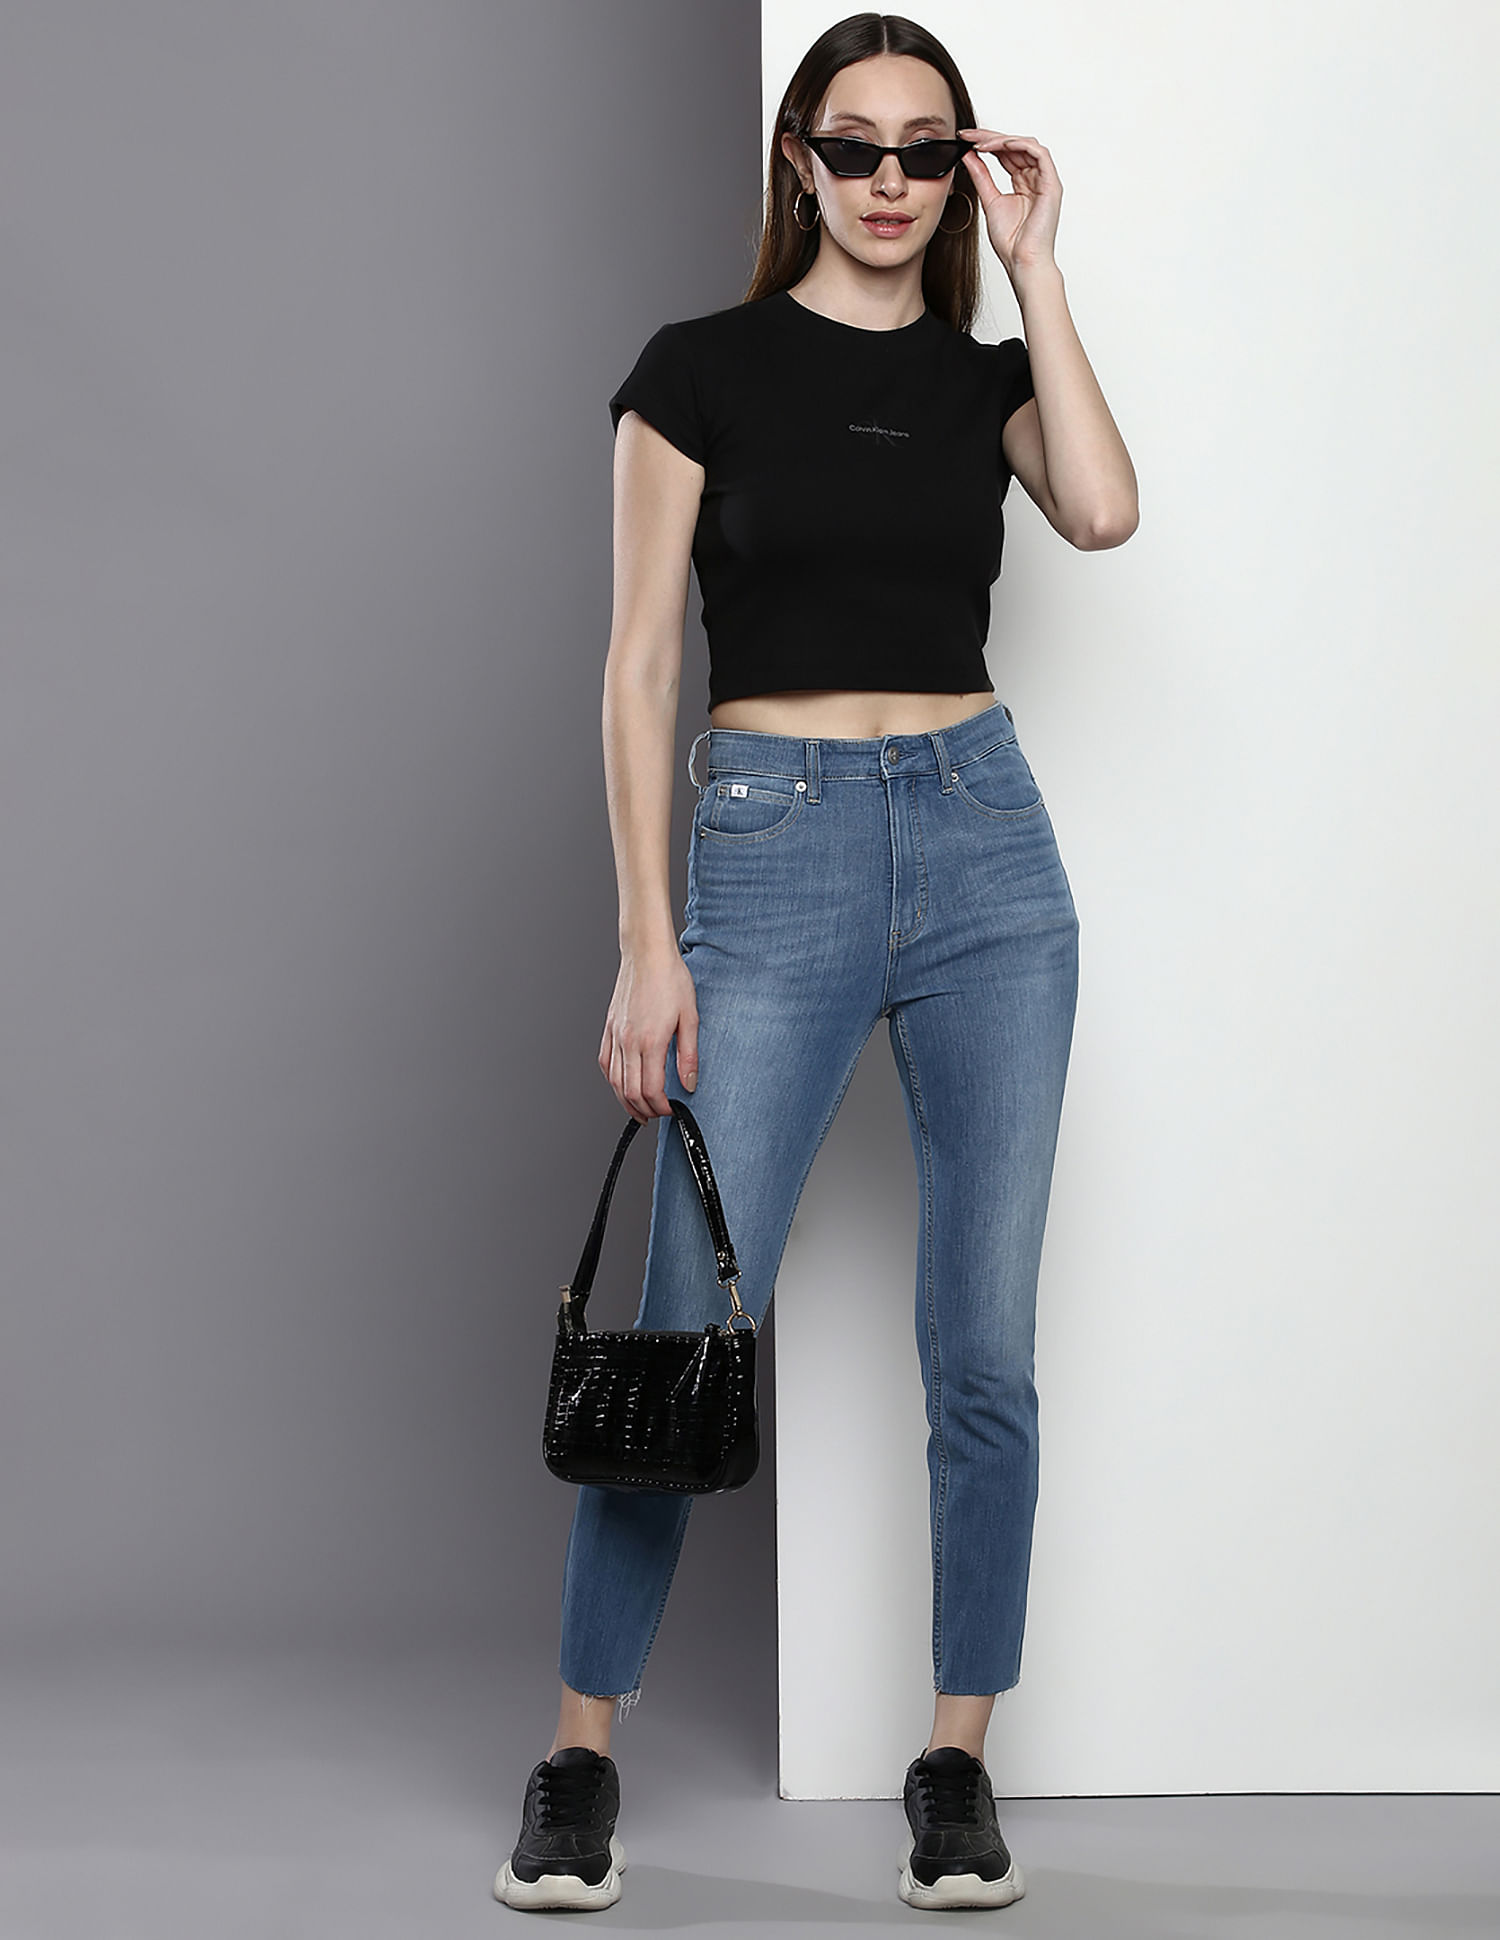 CalvinKlein Jeans Ladies' High Rise Jeans 1601877 Size 8 - beyond exchange